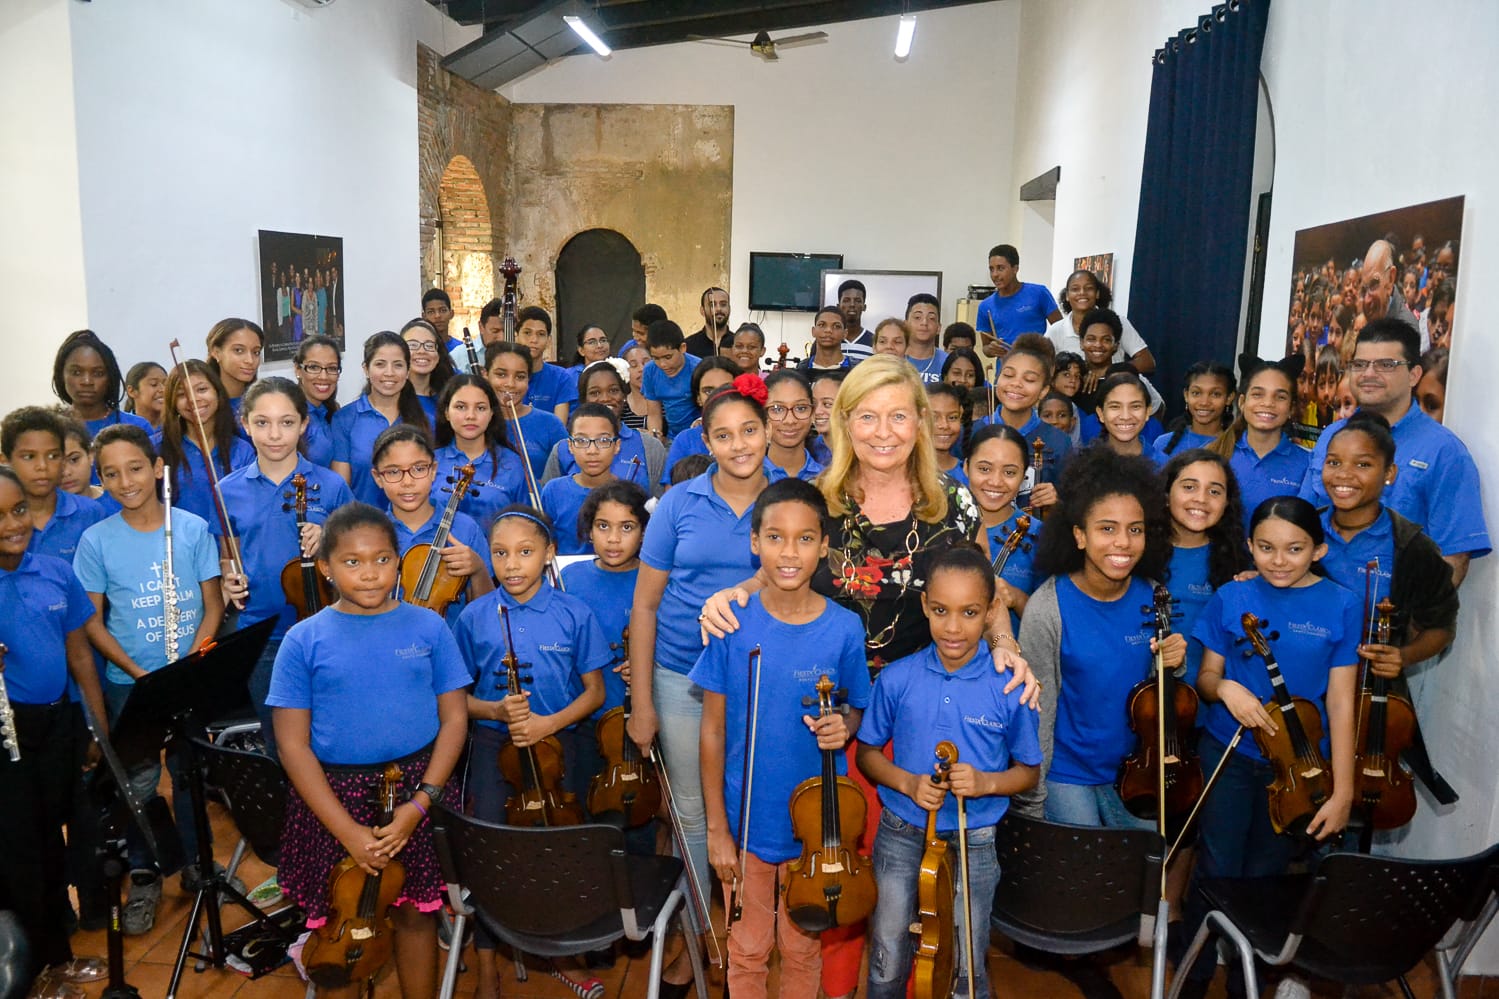 Fundación Fiesta Clásica announces a symphonic concert at the Regina Angelorum church